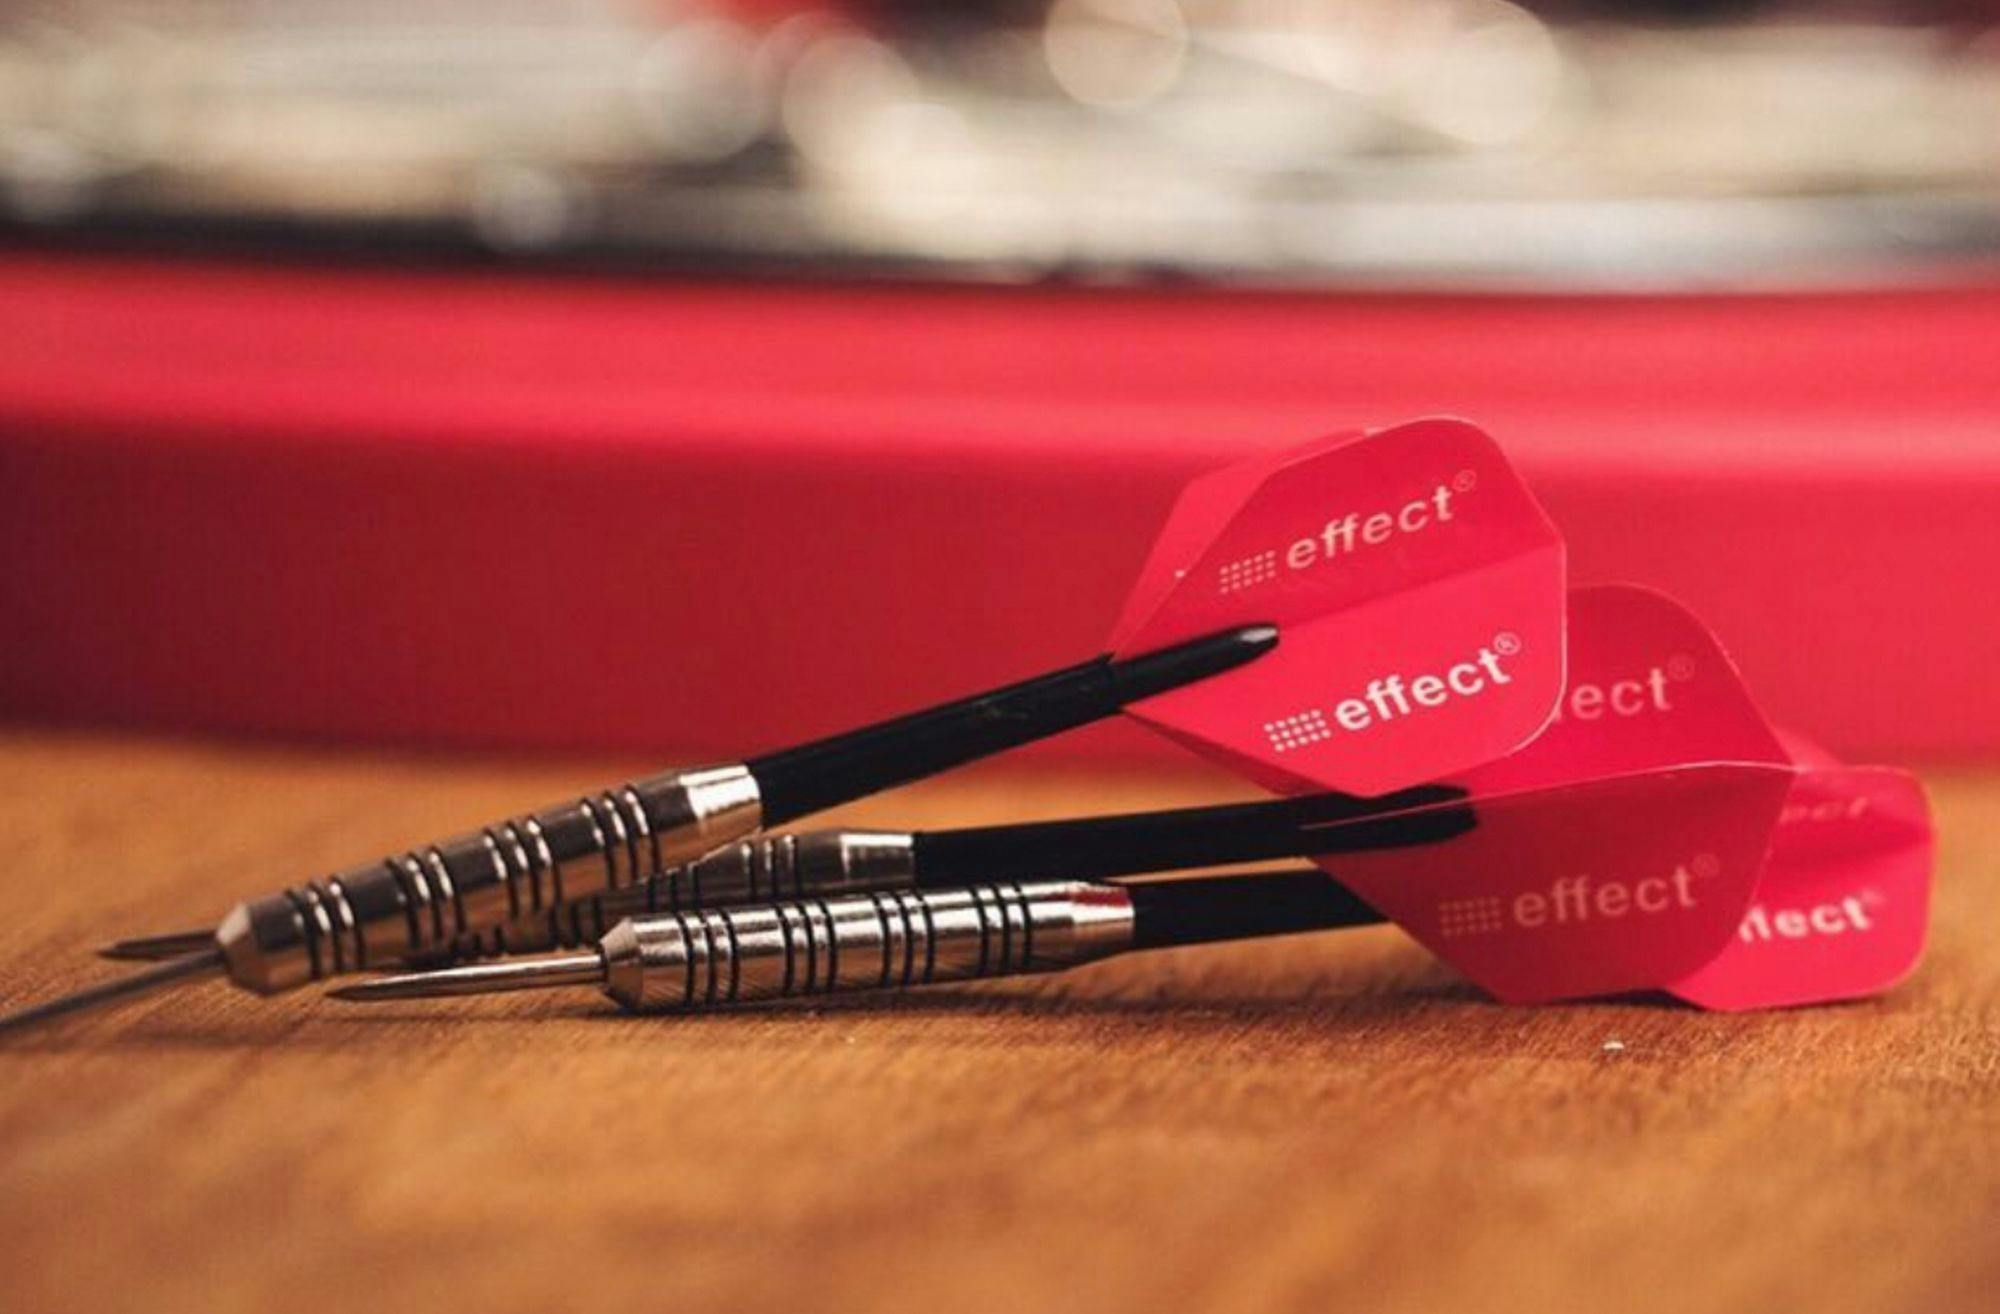 EFFECT darts merchandise - fresh id